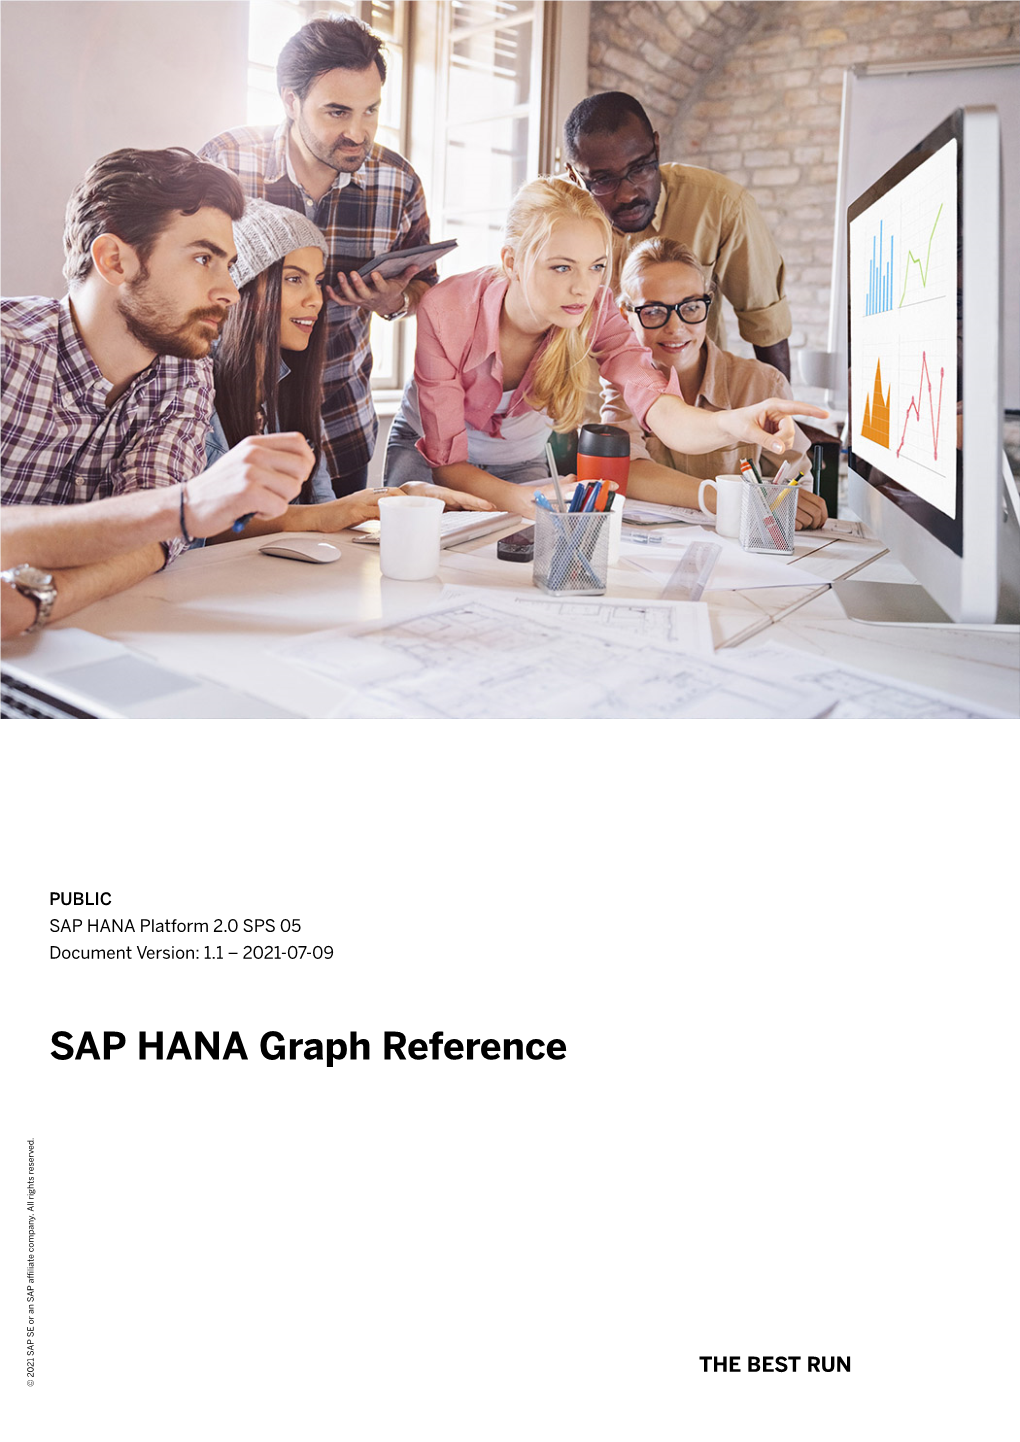 SAP HANA Graph Reference Company